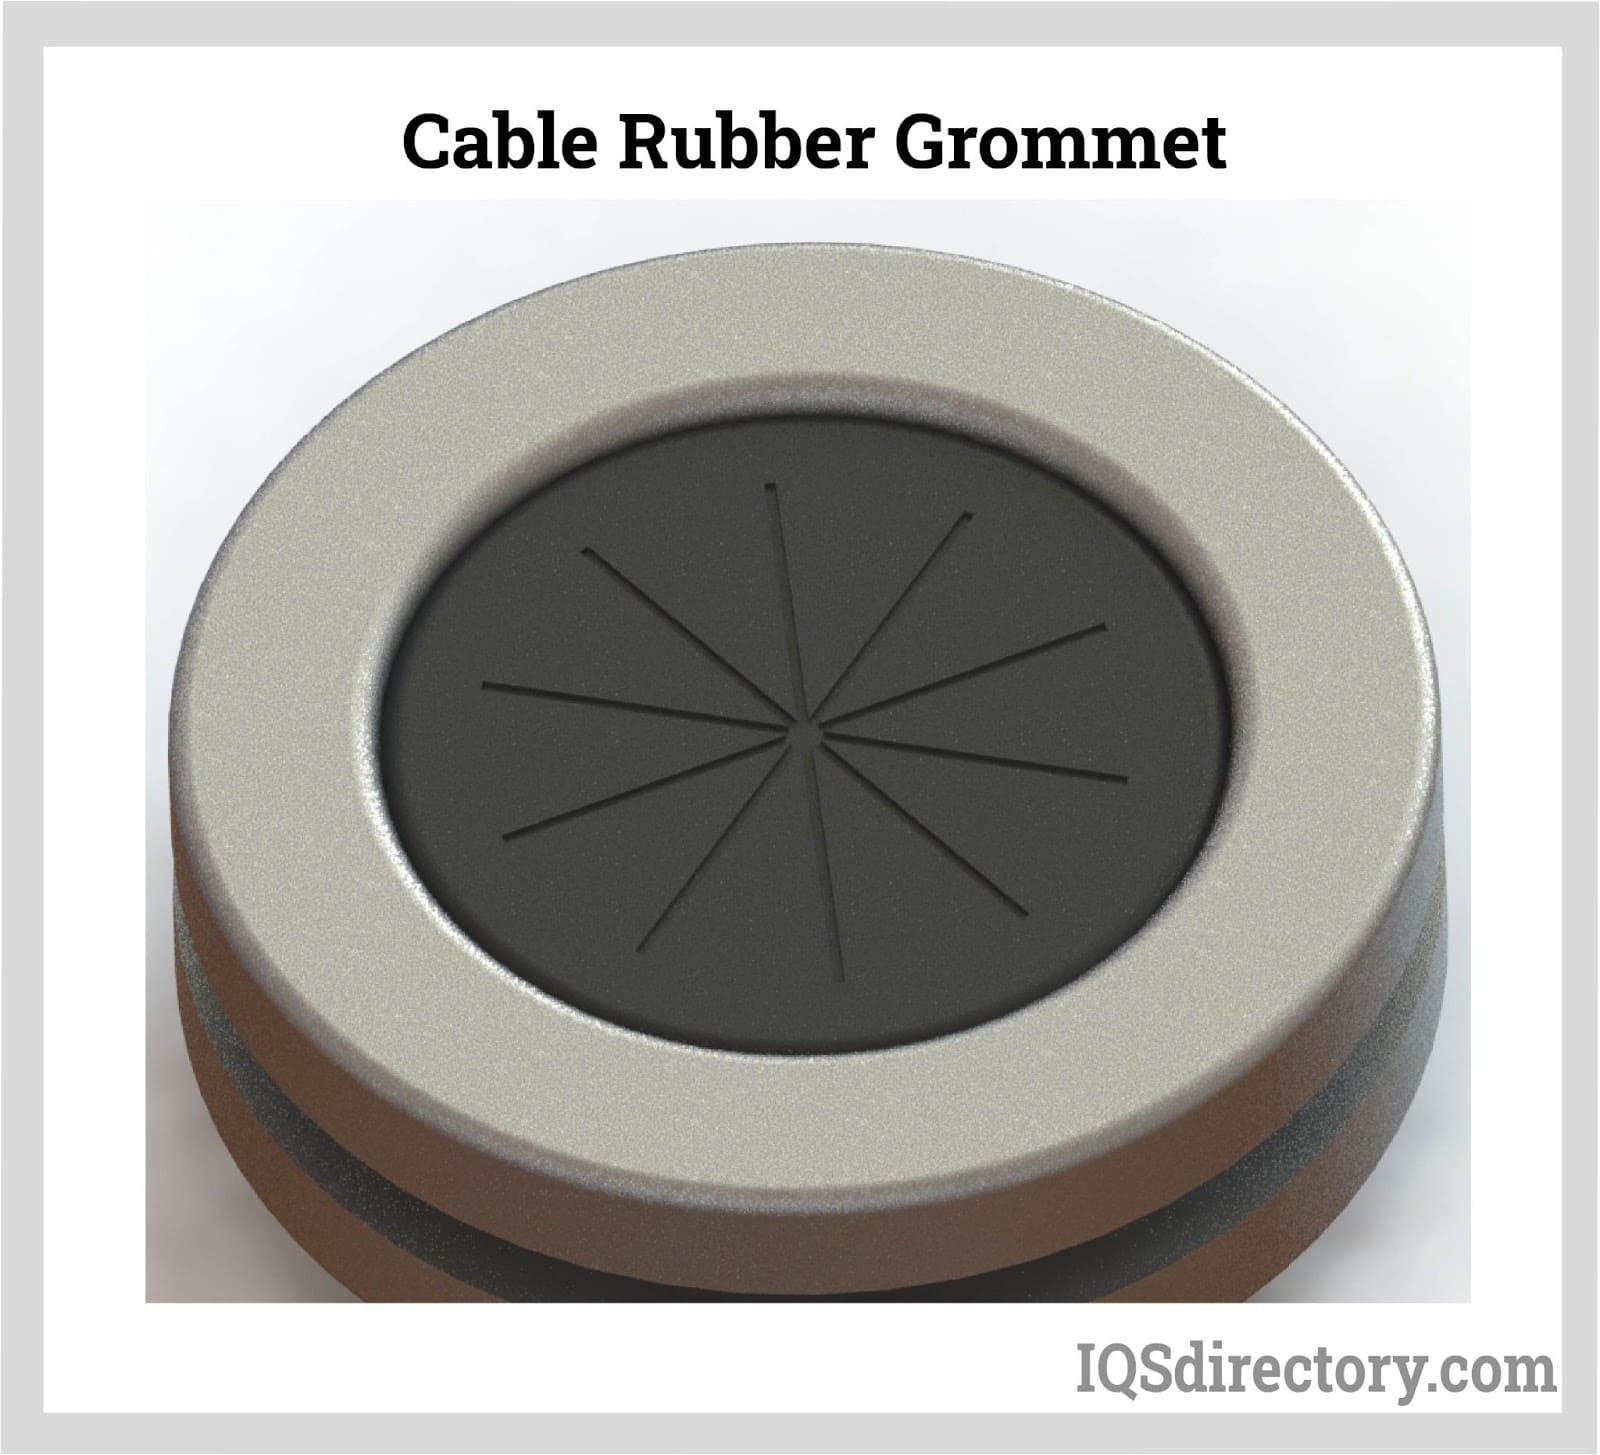 Cable Rubber Grommet